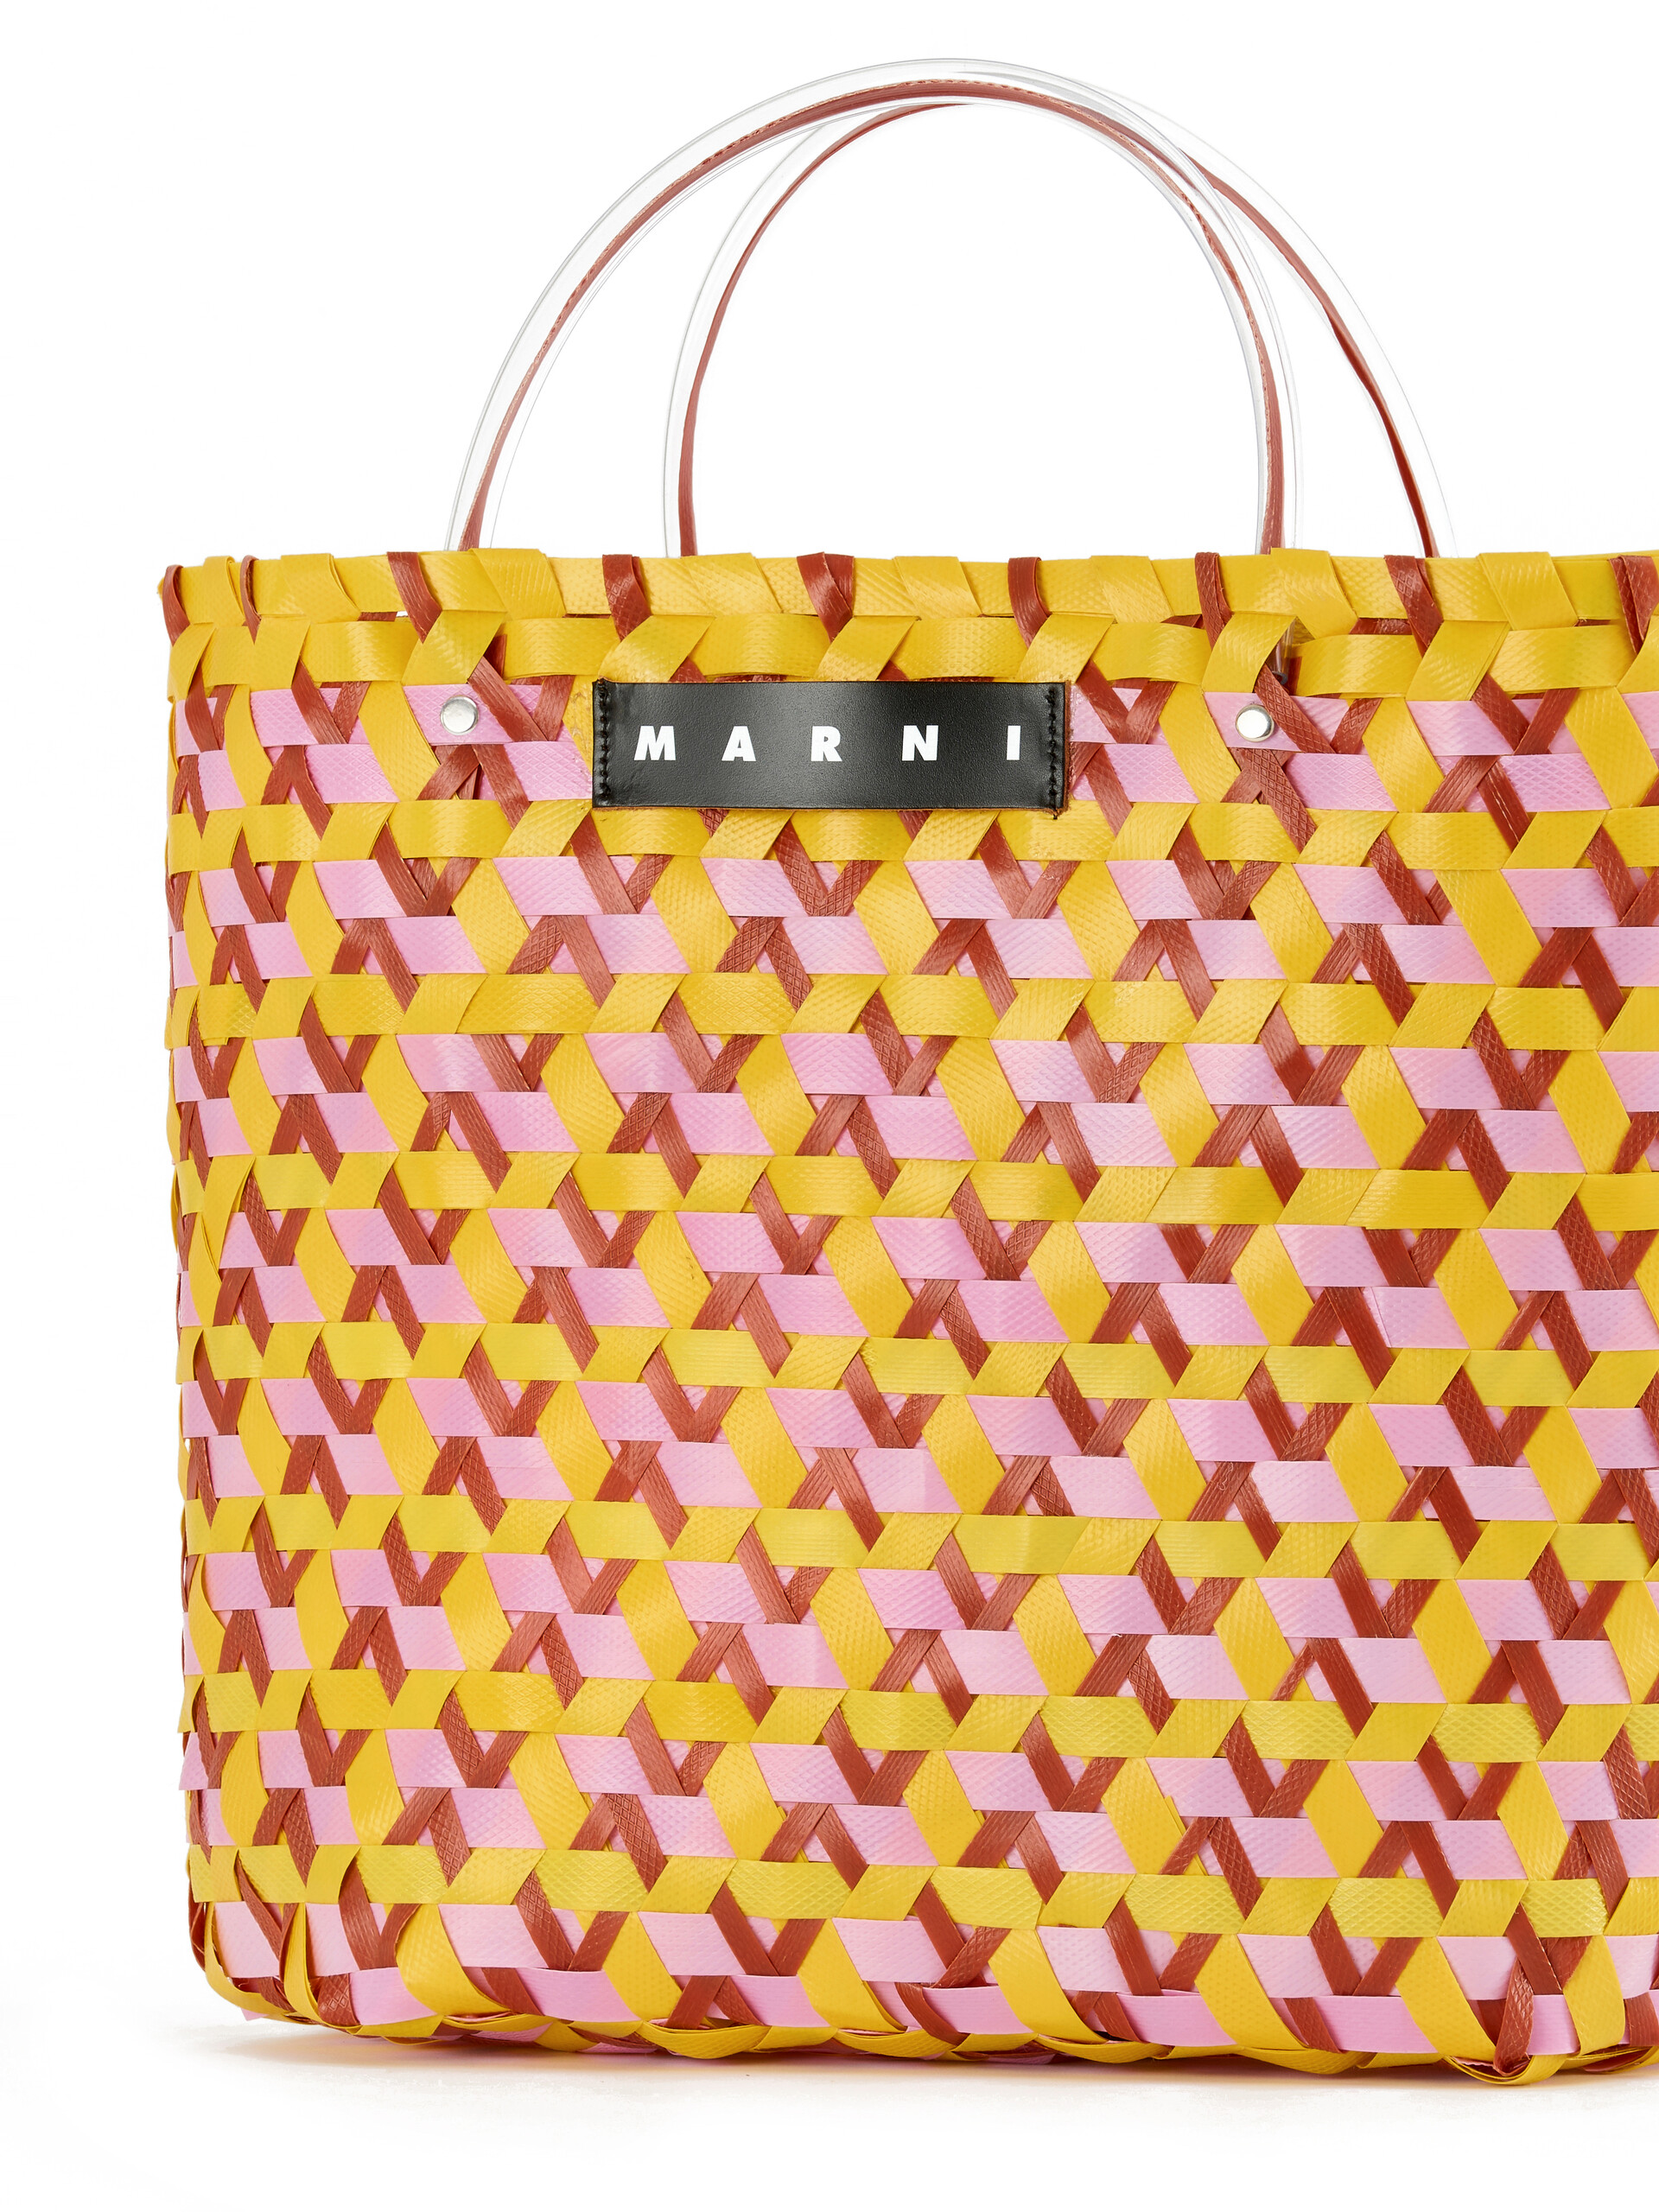 Black tritone MARNI MARKET tall tote bag - Shopping Bags - Image 4